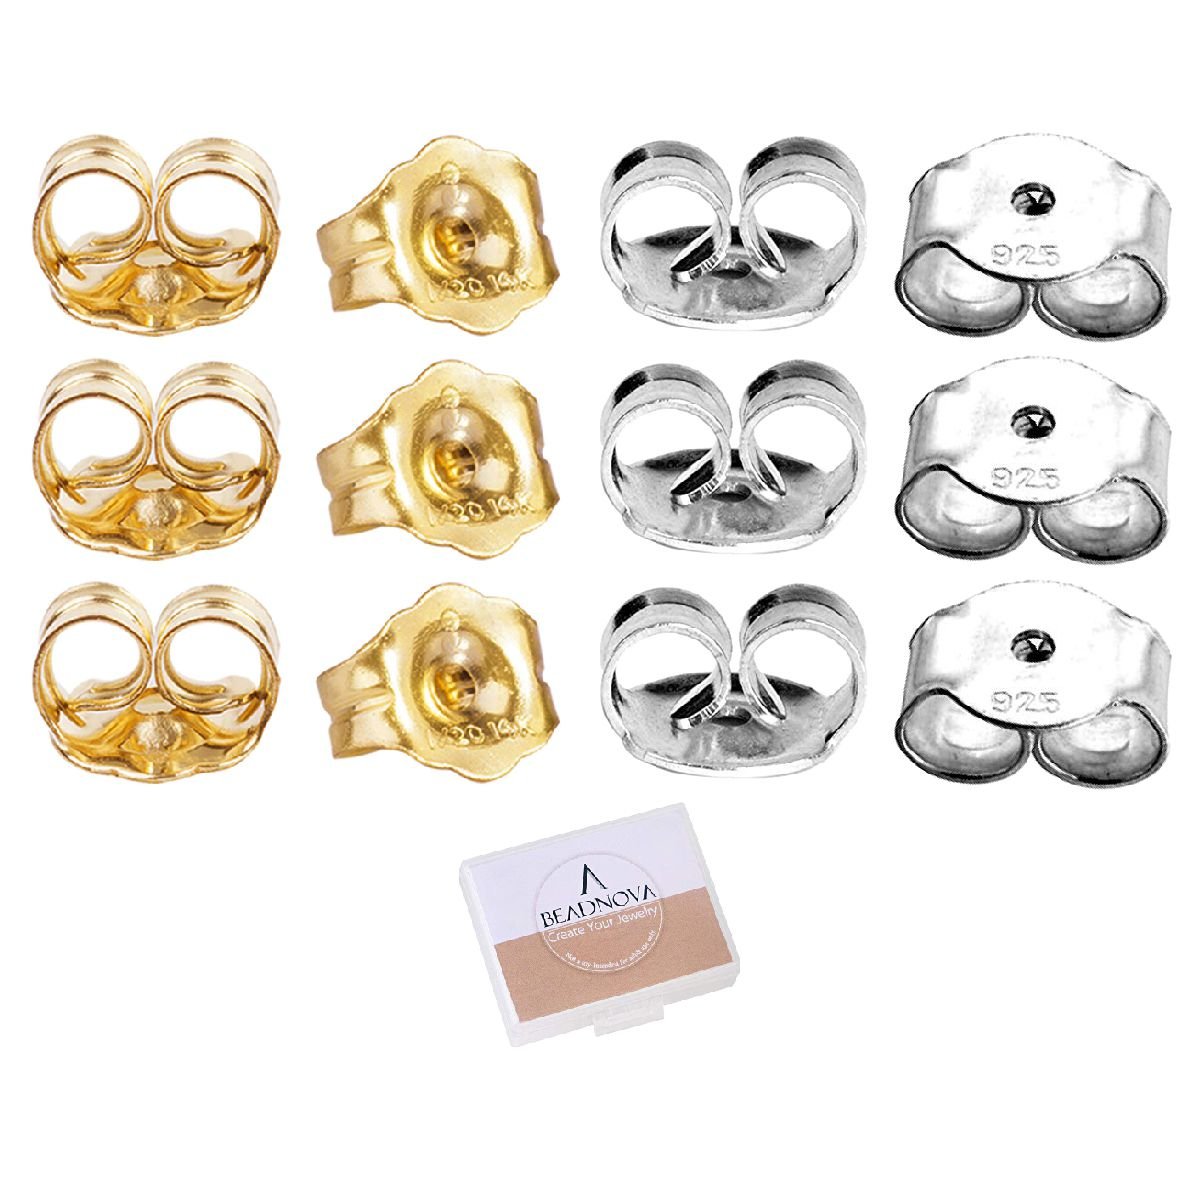 Details more than 69 real gold earring backs super hot - esthdonghoadian